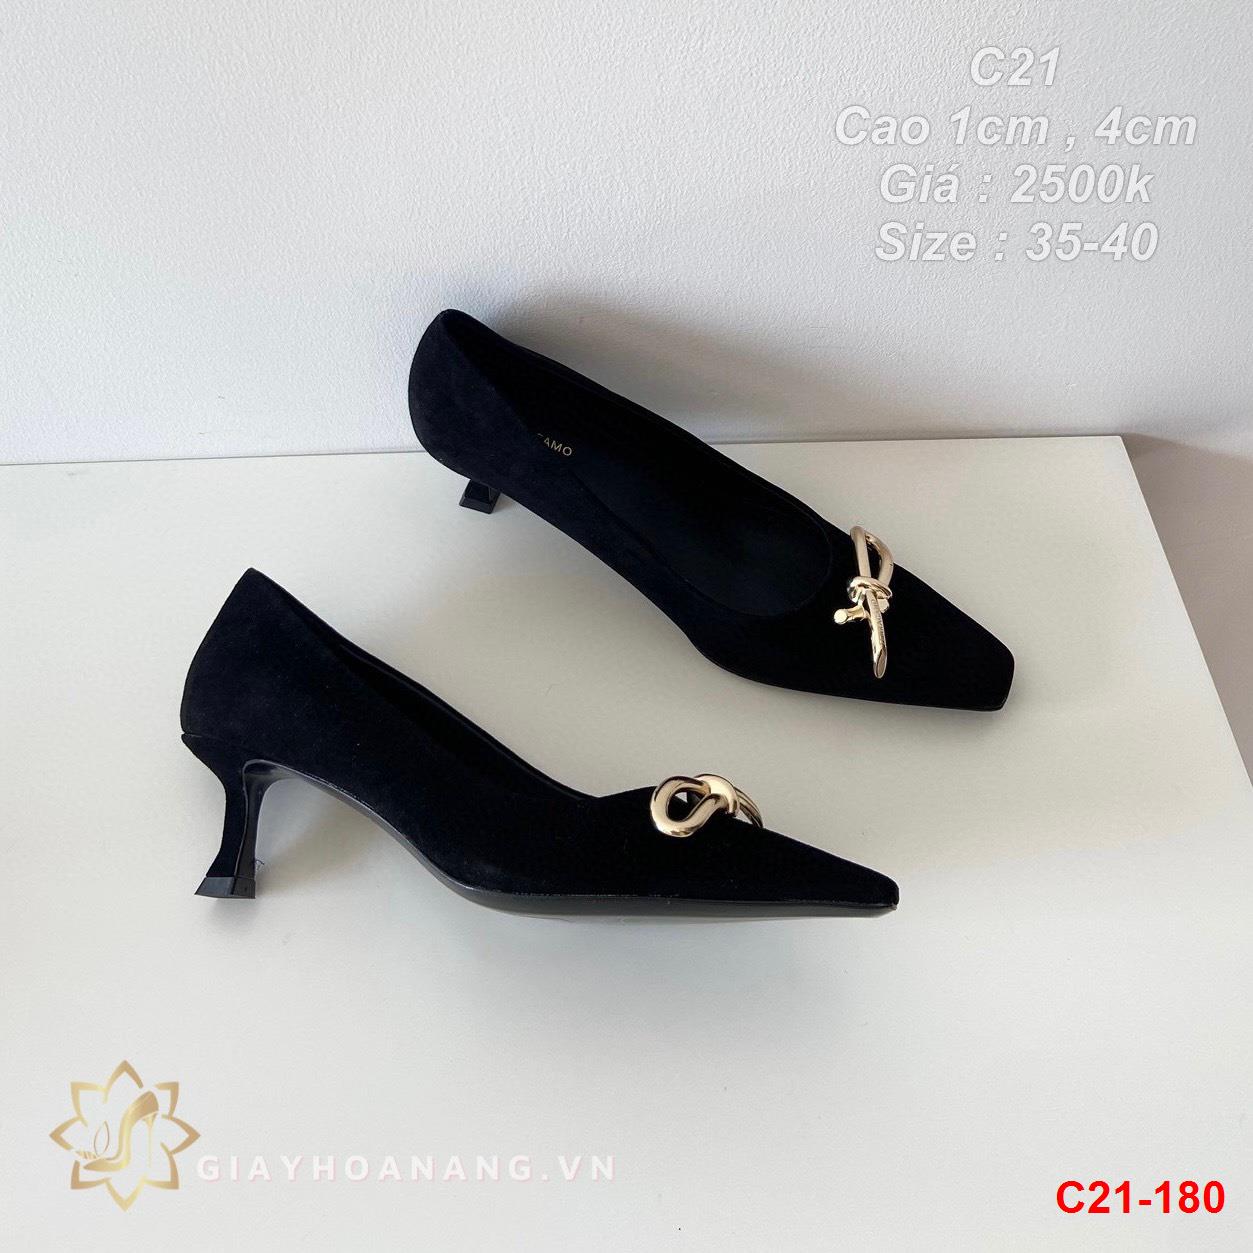 C21-180 Ferragamo giày cao gót 1cm , 4cm siêu cấp